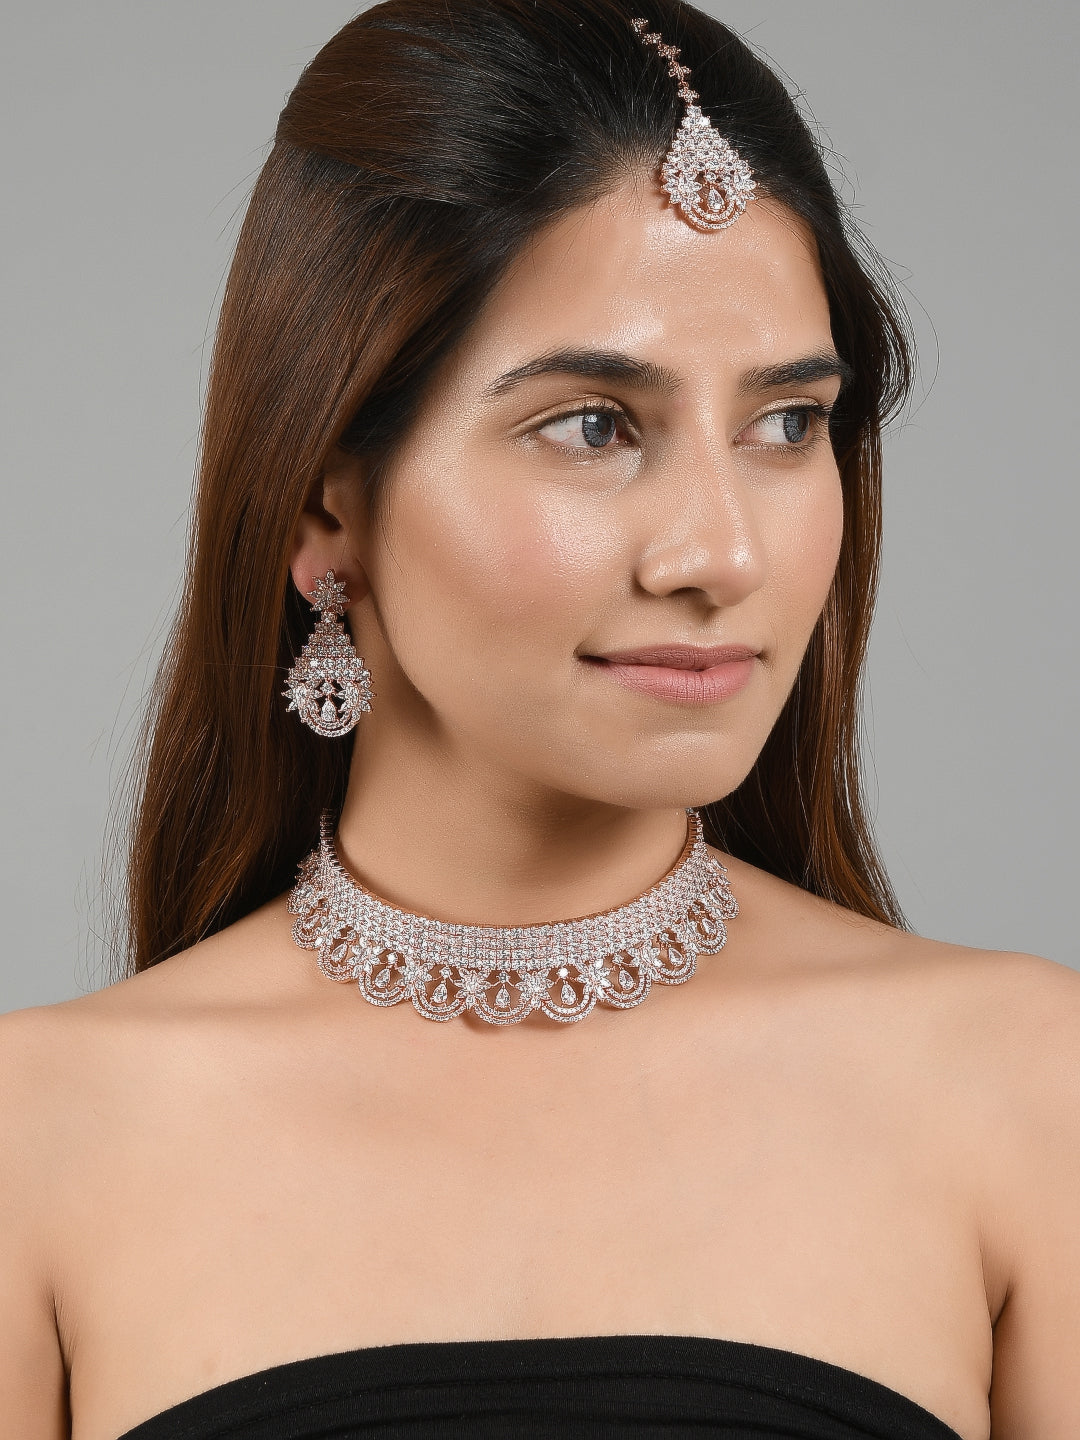 American diamond bridal necklace set Unique design